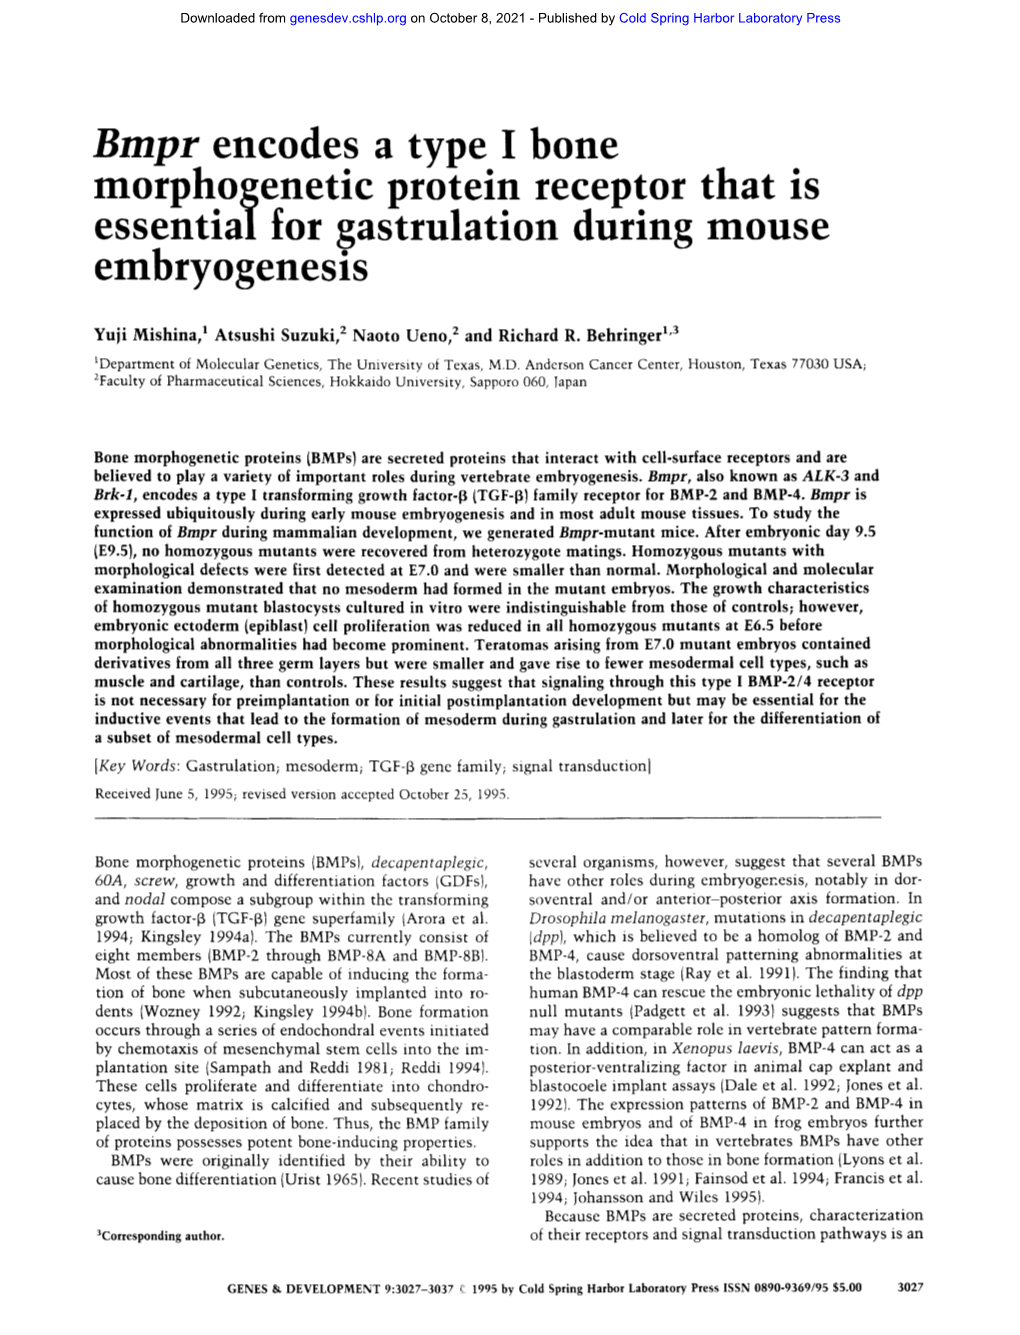 Bmpr Encodes a Type I Bone Morphogenetic Protein Receptor That Is Essential for Gastrulation During Mouse Embryogenesis